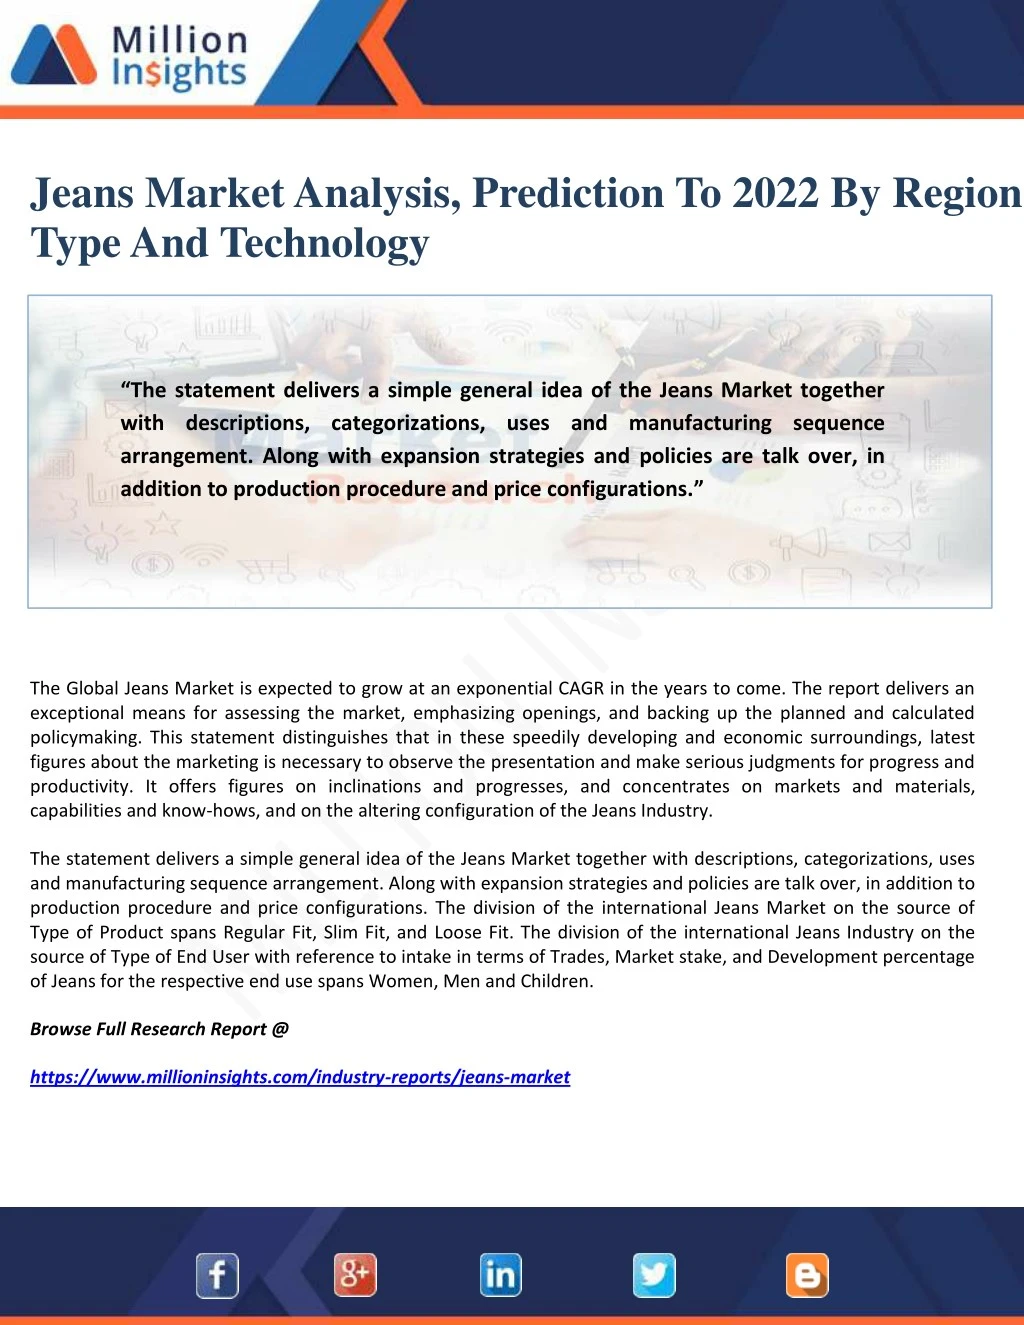 jeans market analysis prediction to 2022